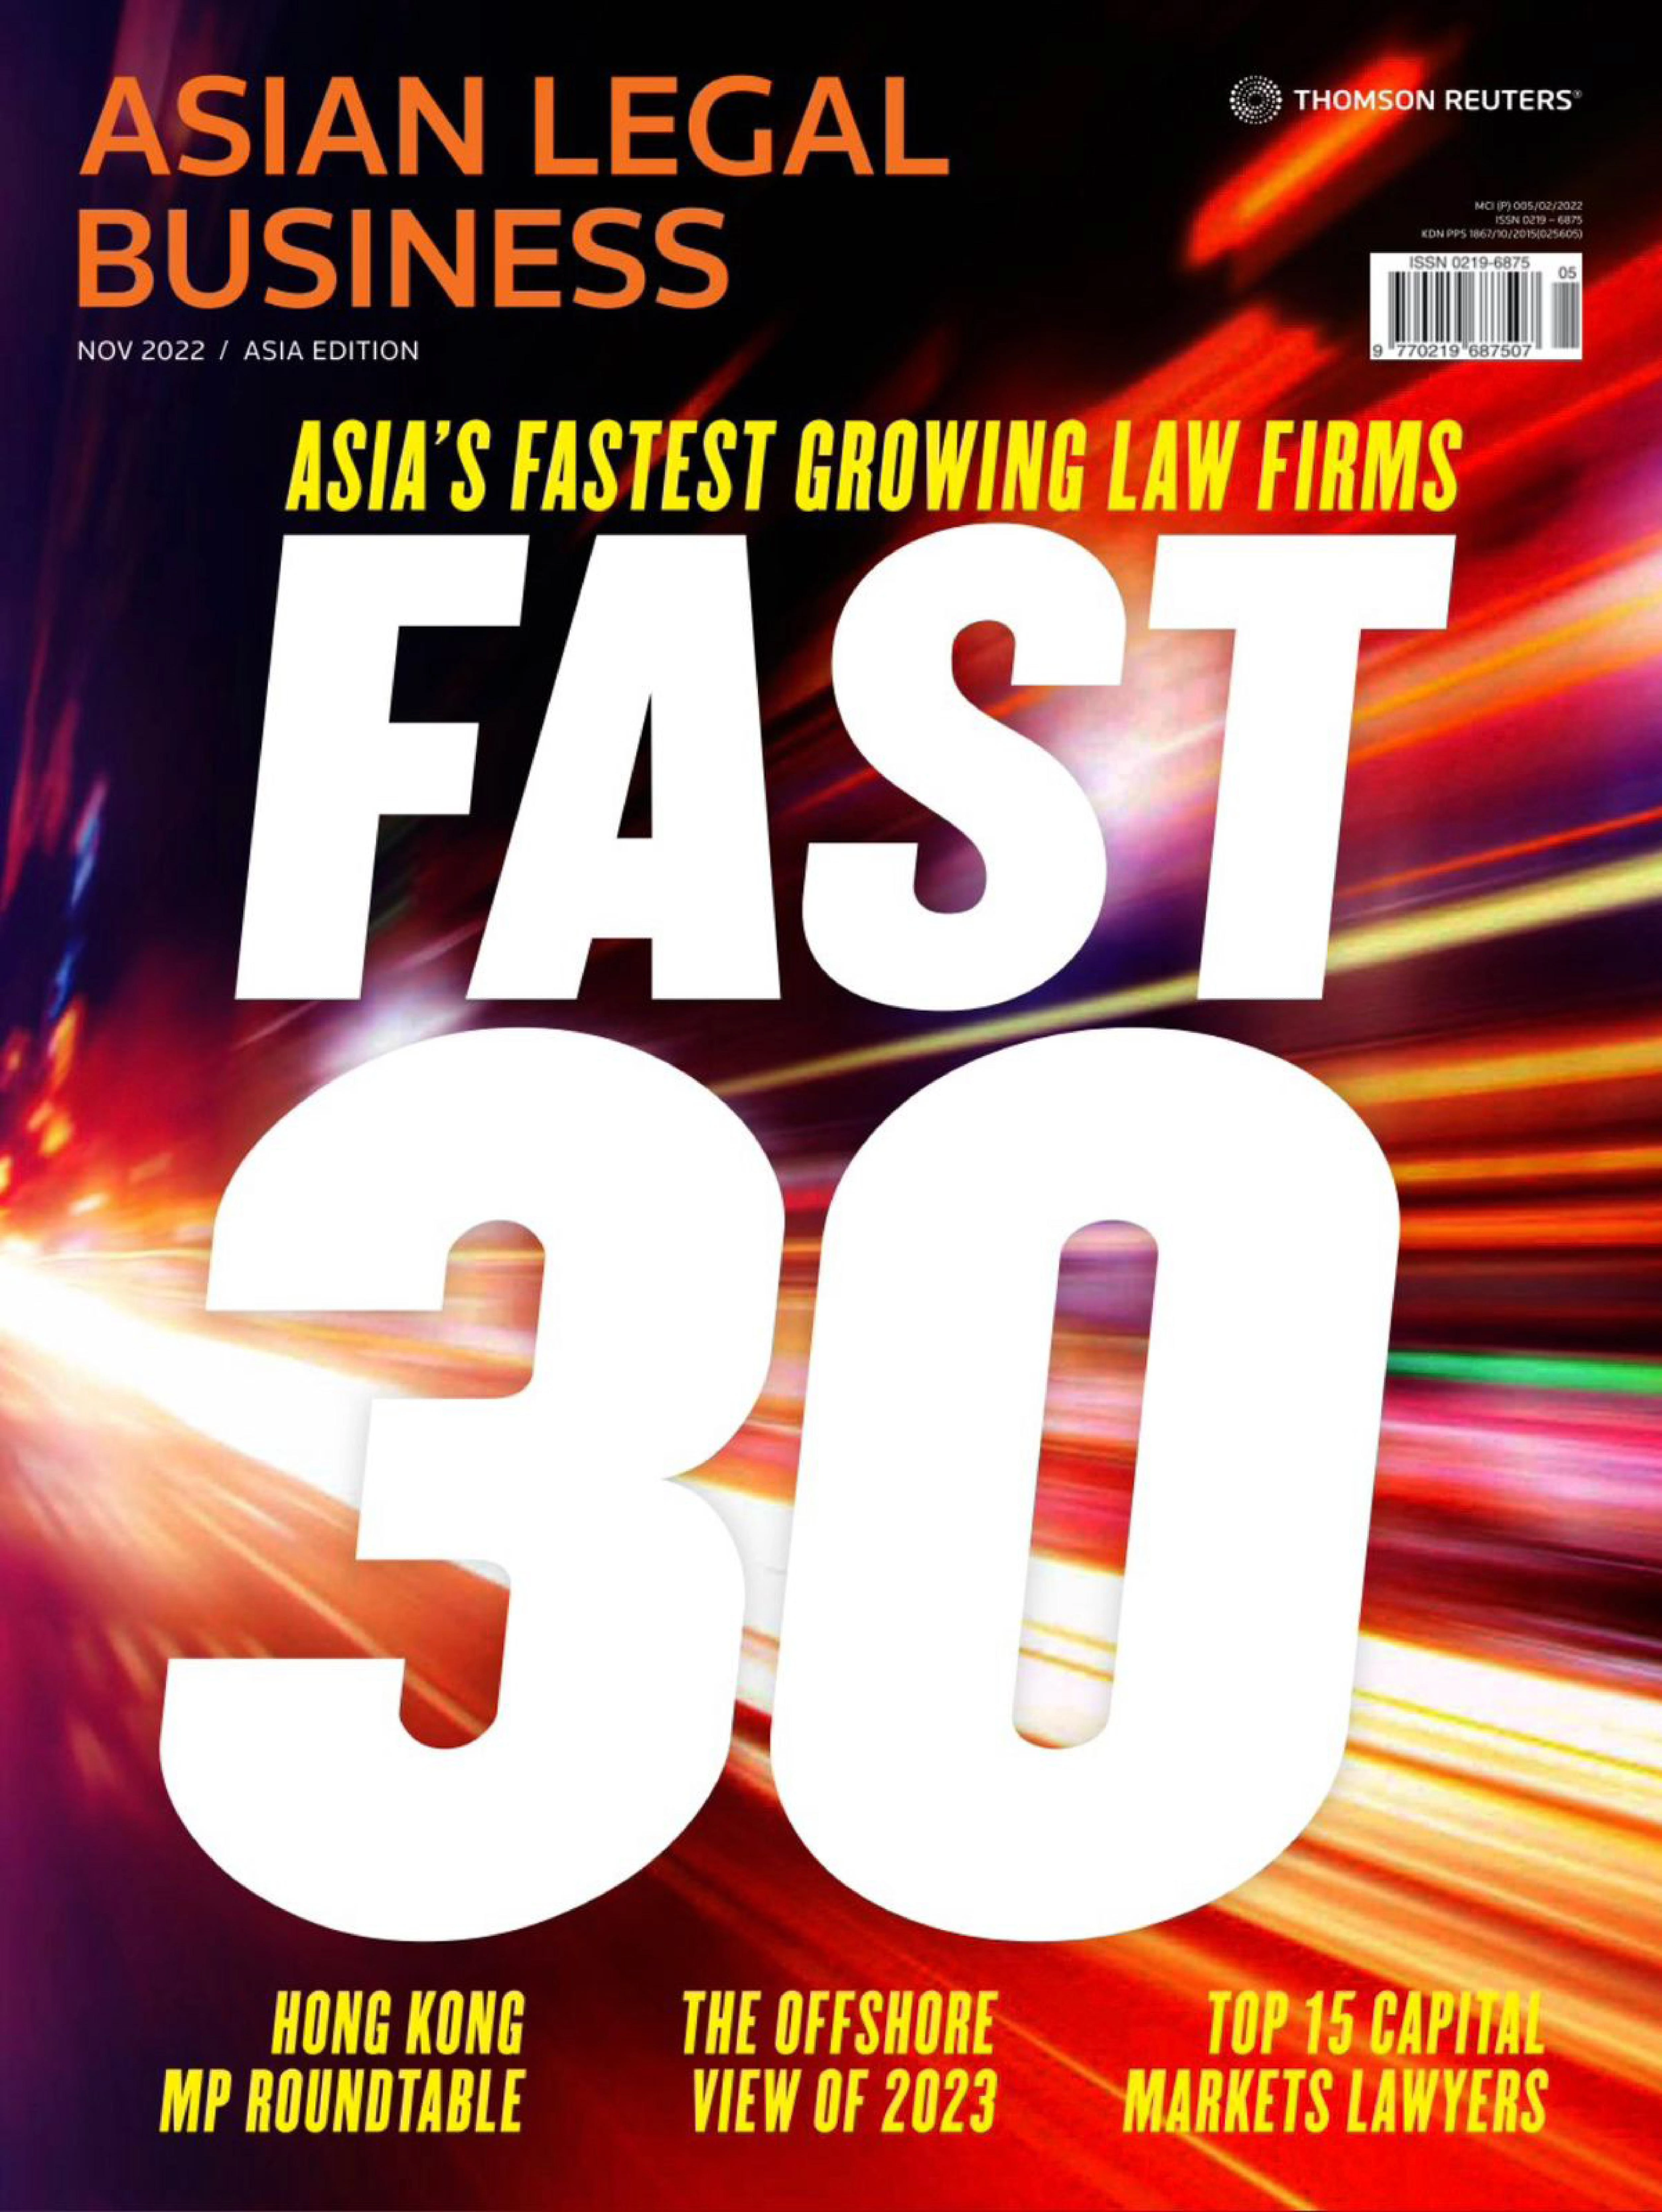 Sucharita Basu on LinkedIn: Asia's Fastest 30 Growing Firms..